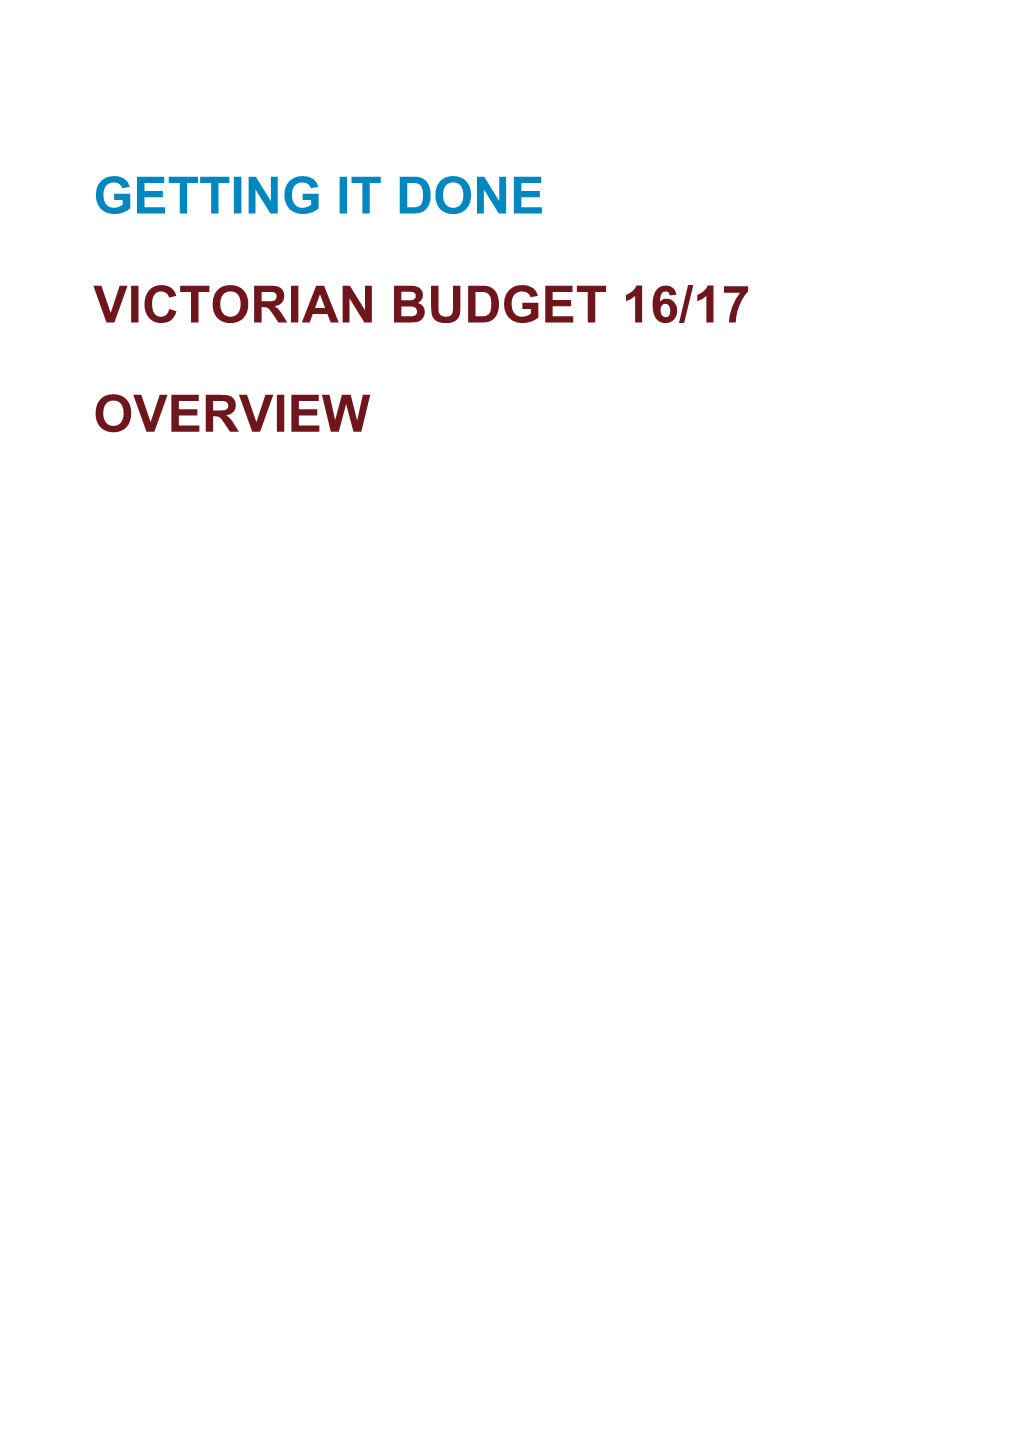 Victorian Budget 16/17